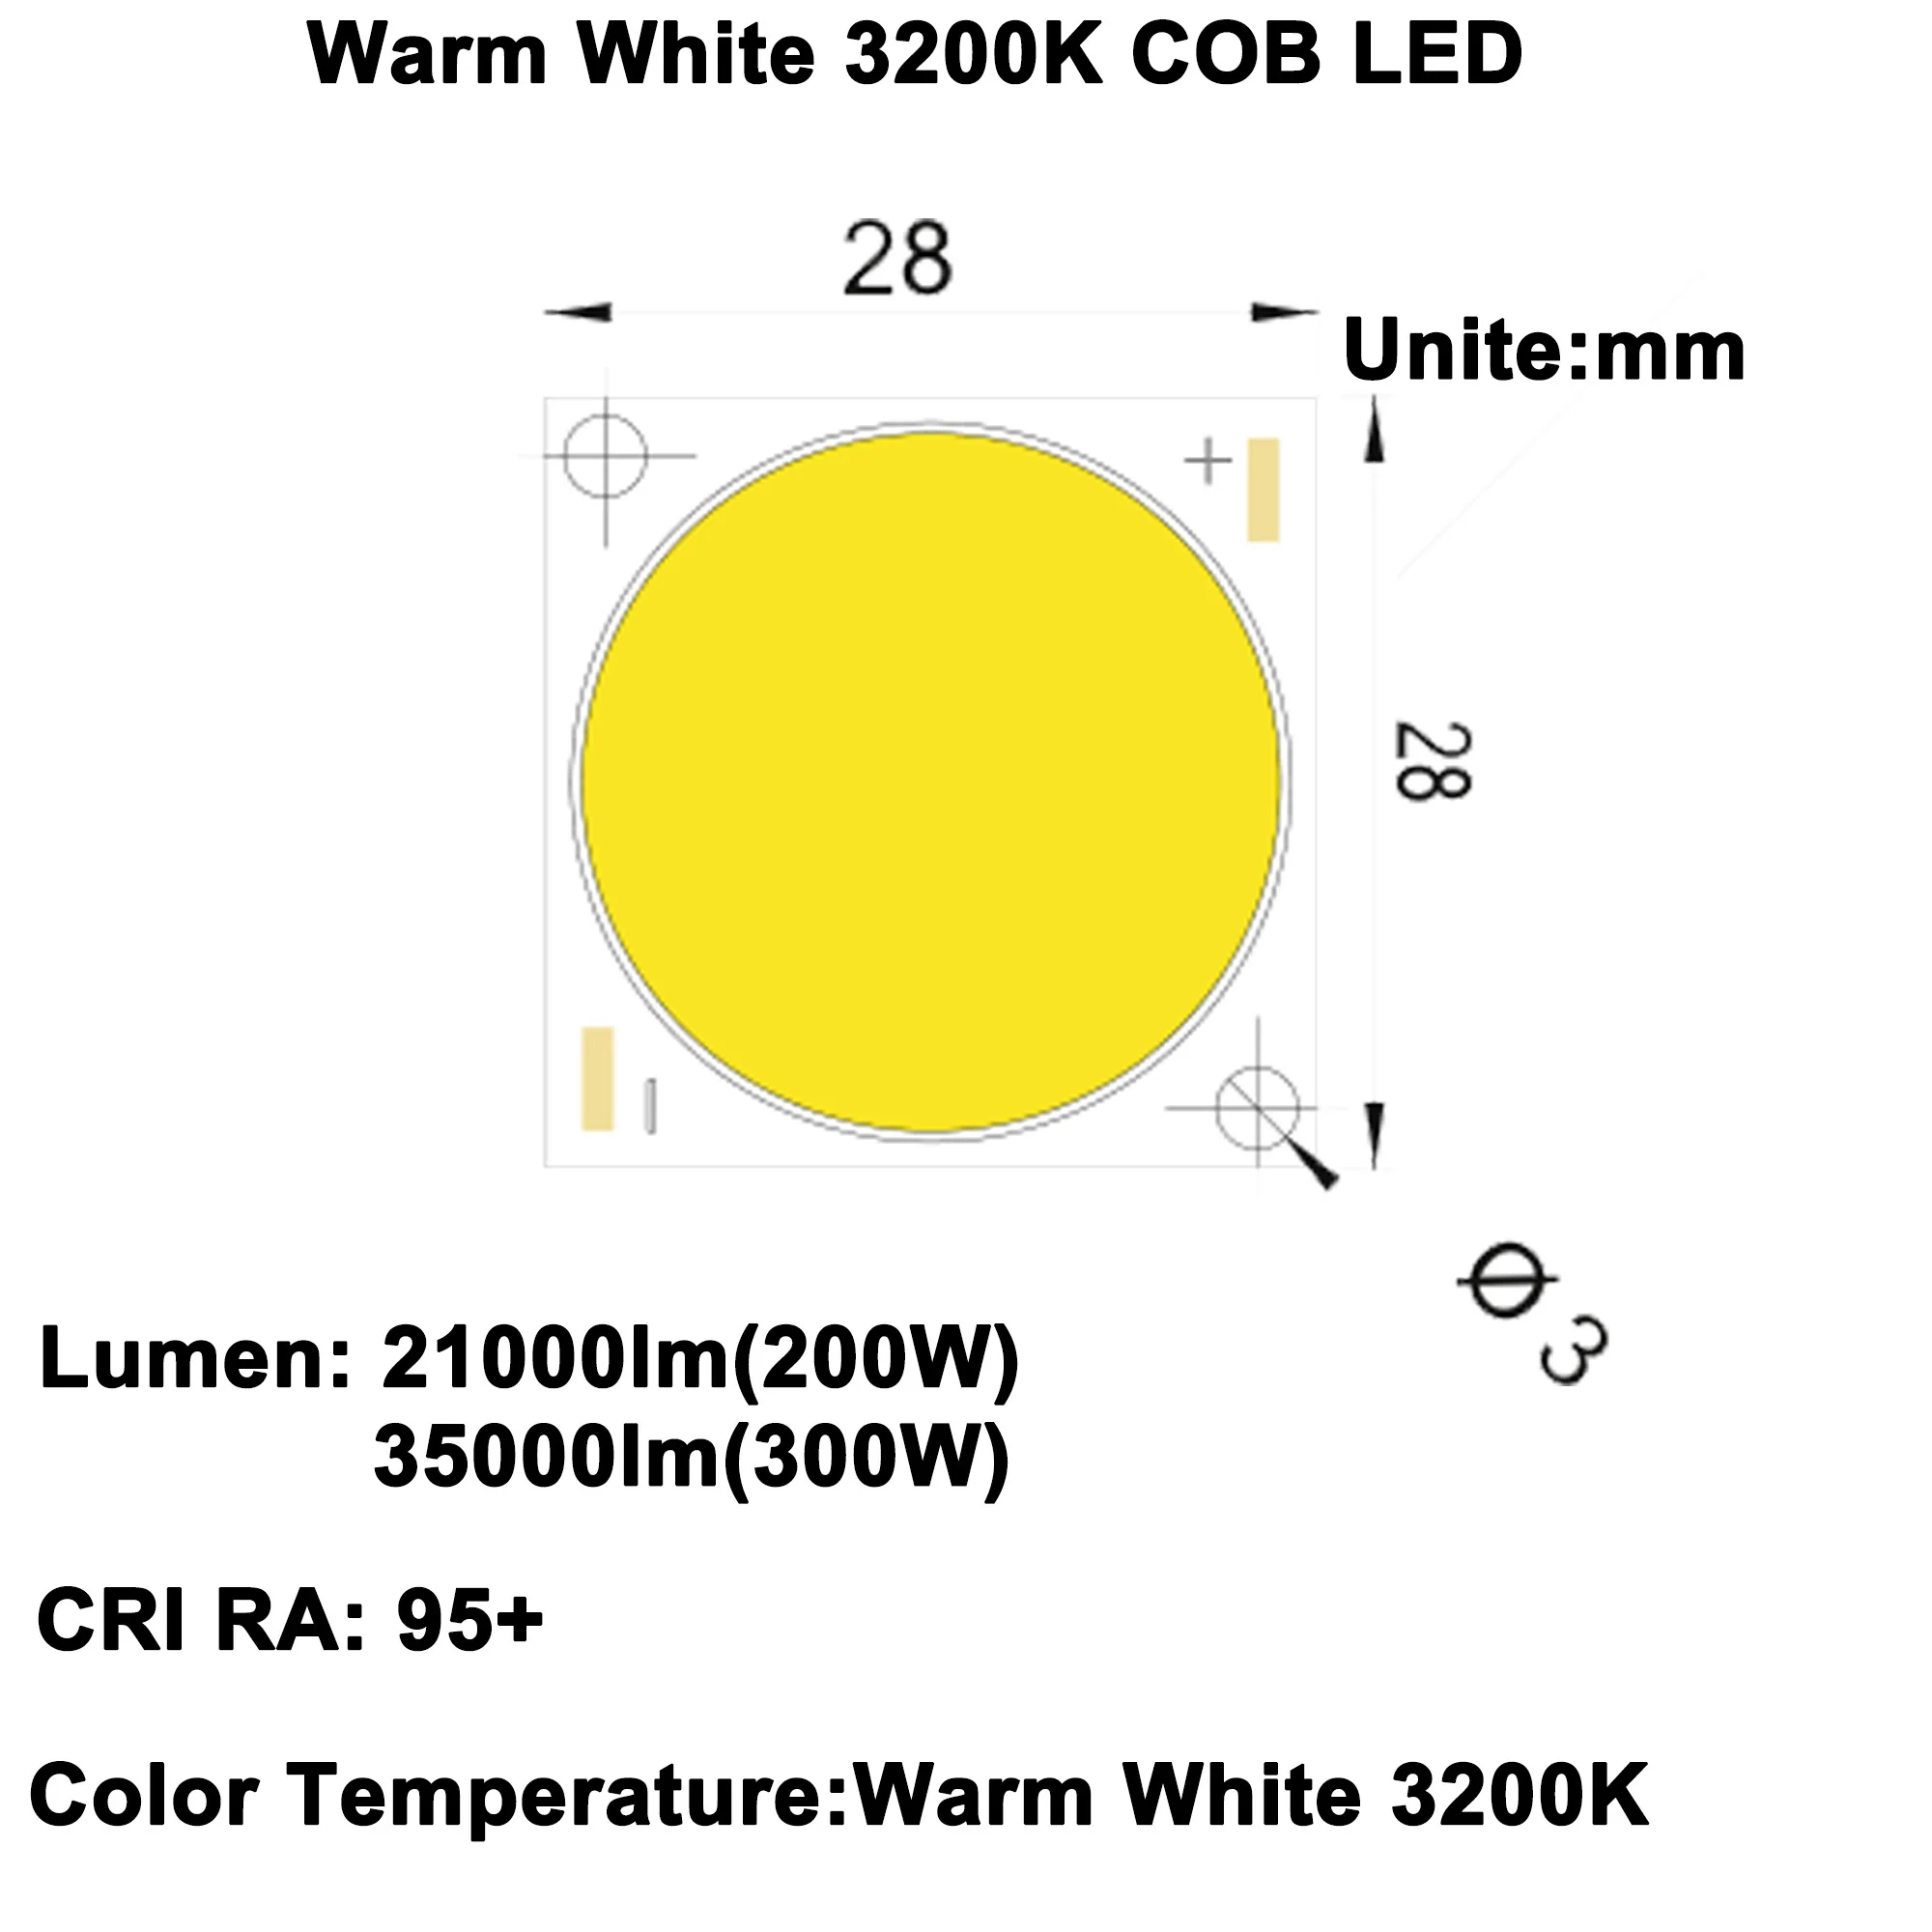 DIY LED U-HOME High CRI RA 95+ 300W COB LED Warm White 3200K DC47.8-56.2V 5750mA 30000-35000lm for DIY LED Flashlight Projector